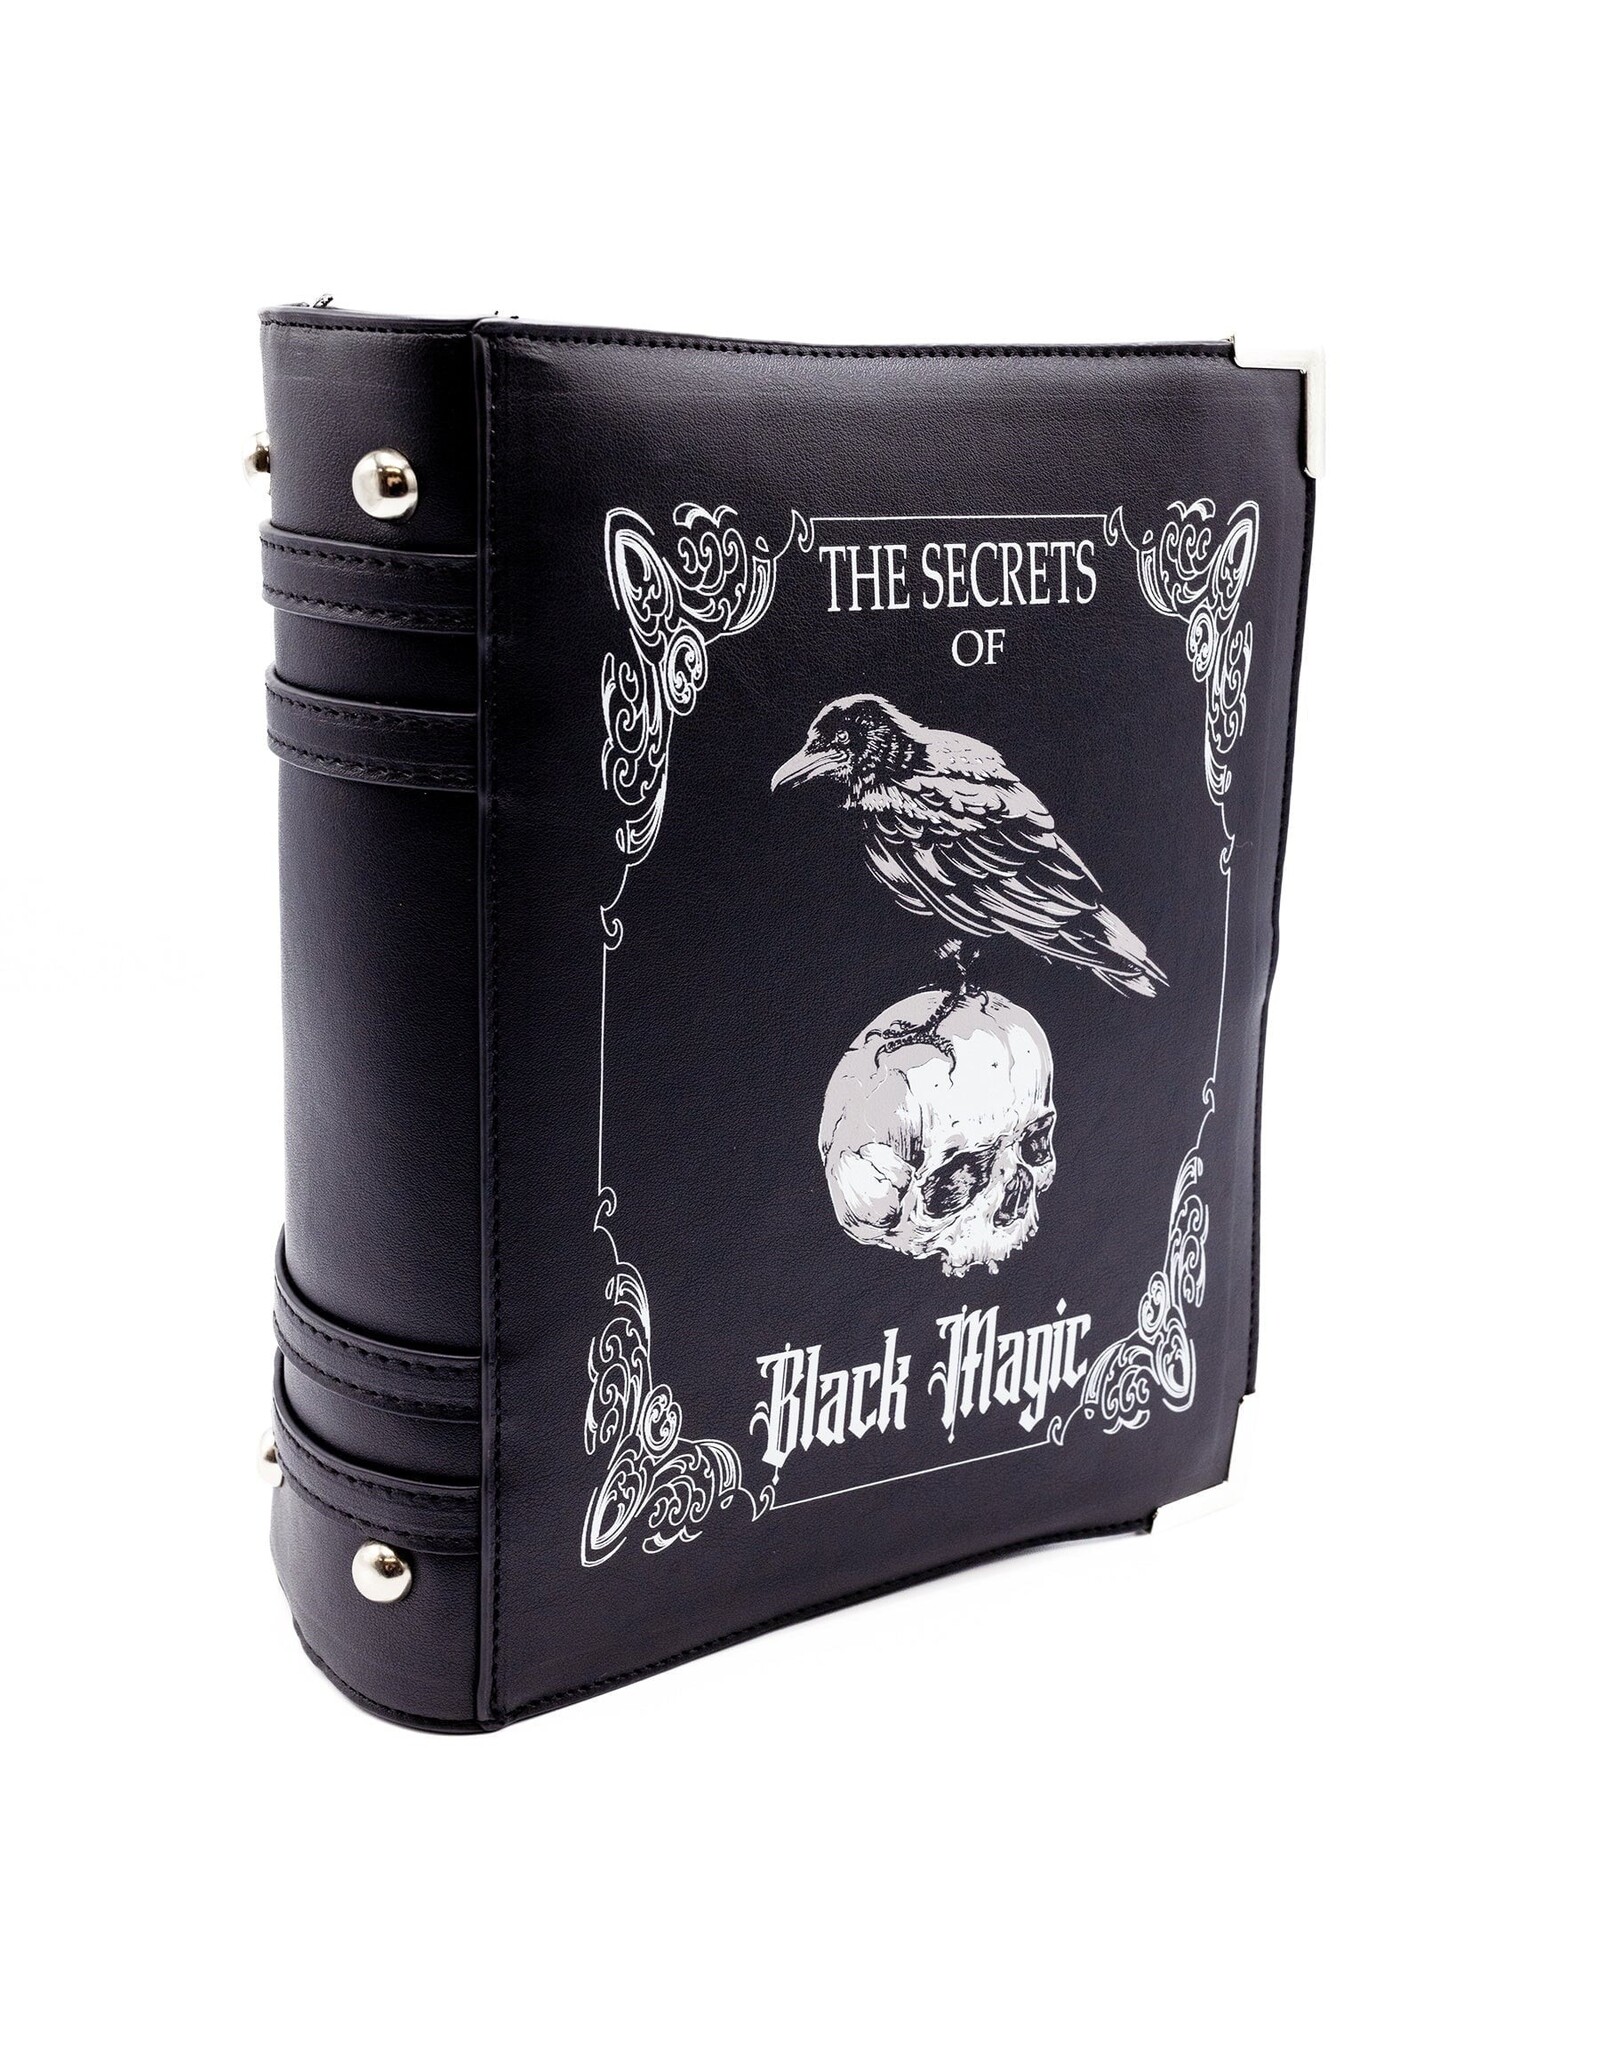 Dark Desire Gothic bags Steampunk bags - Black Magic Book Shoulderbag Heartless